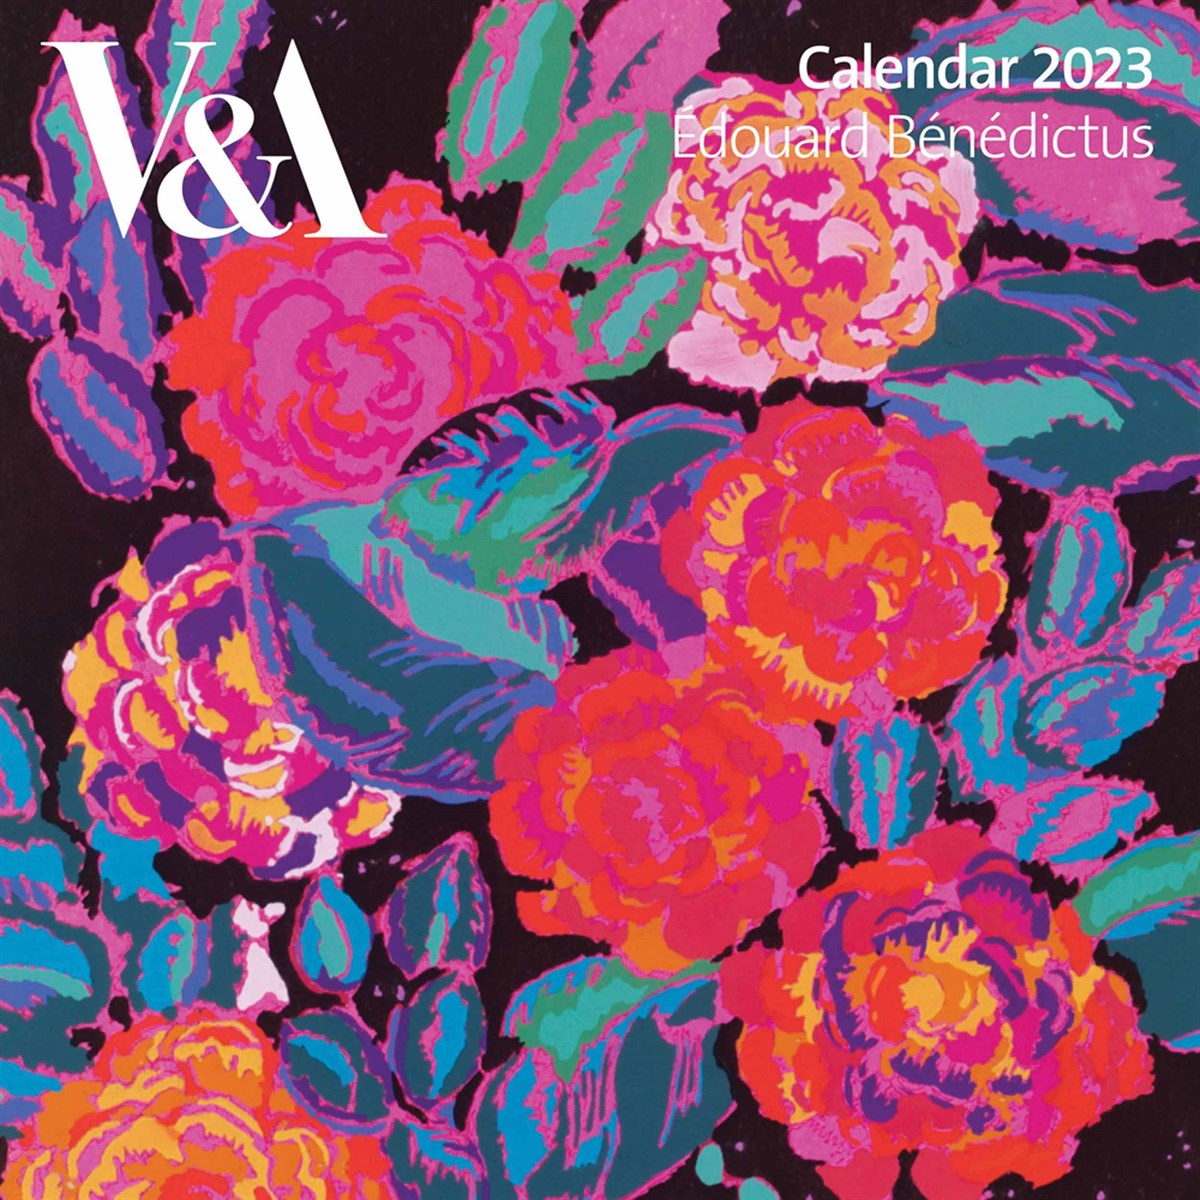 V&A, Édouard Bénédictus 2023 Calendars